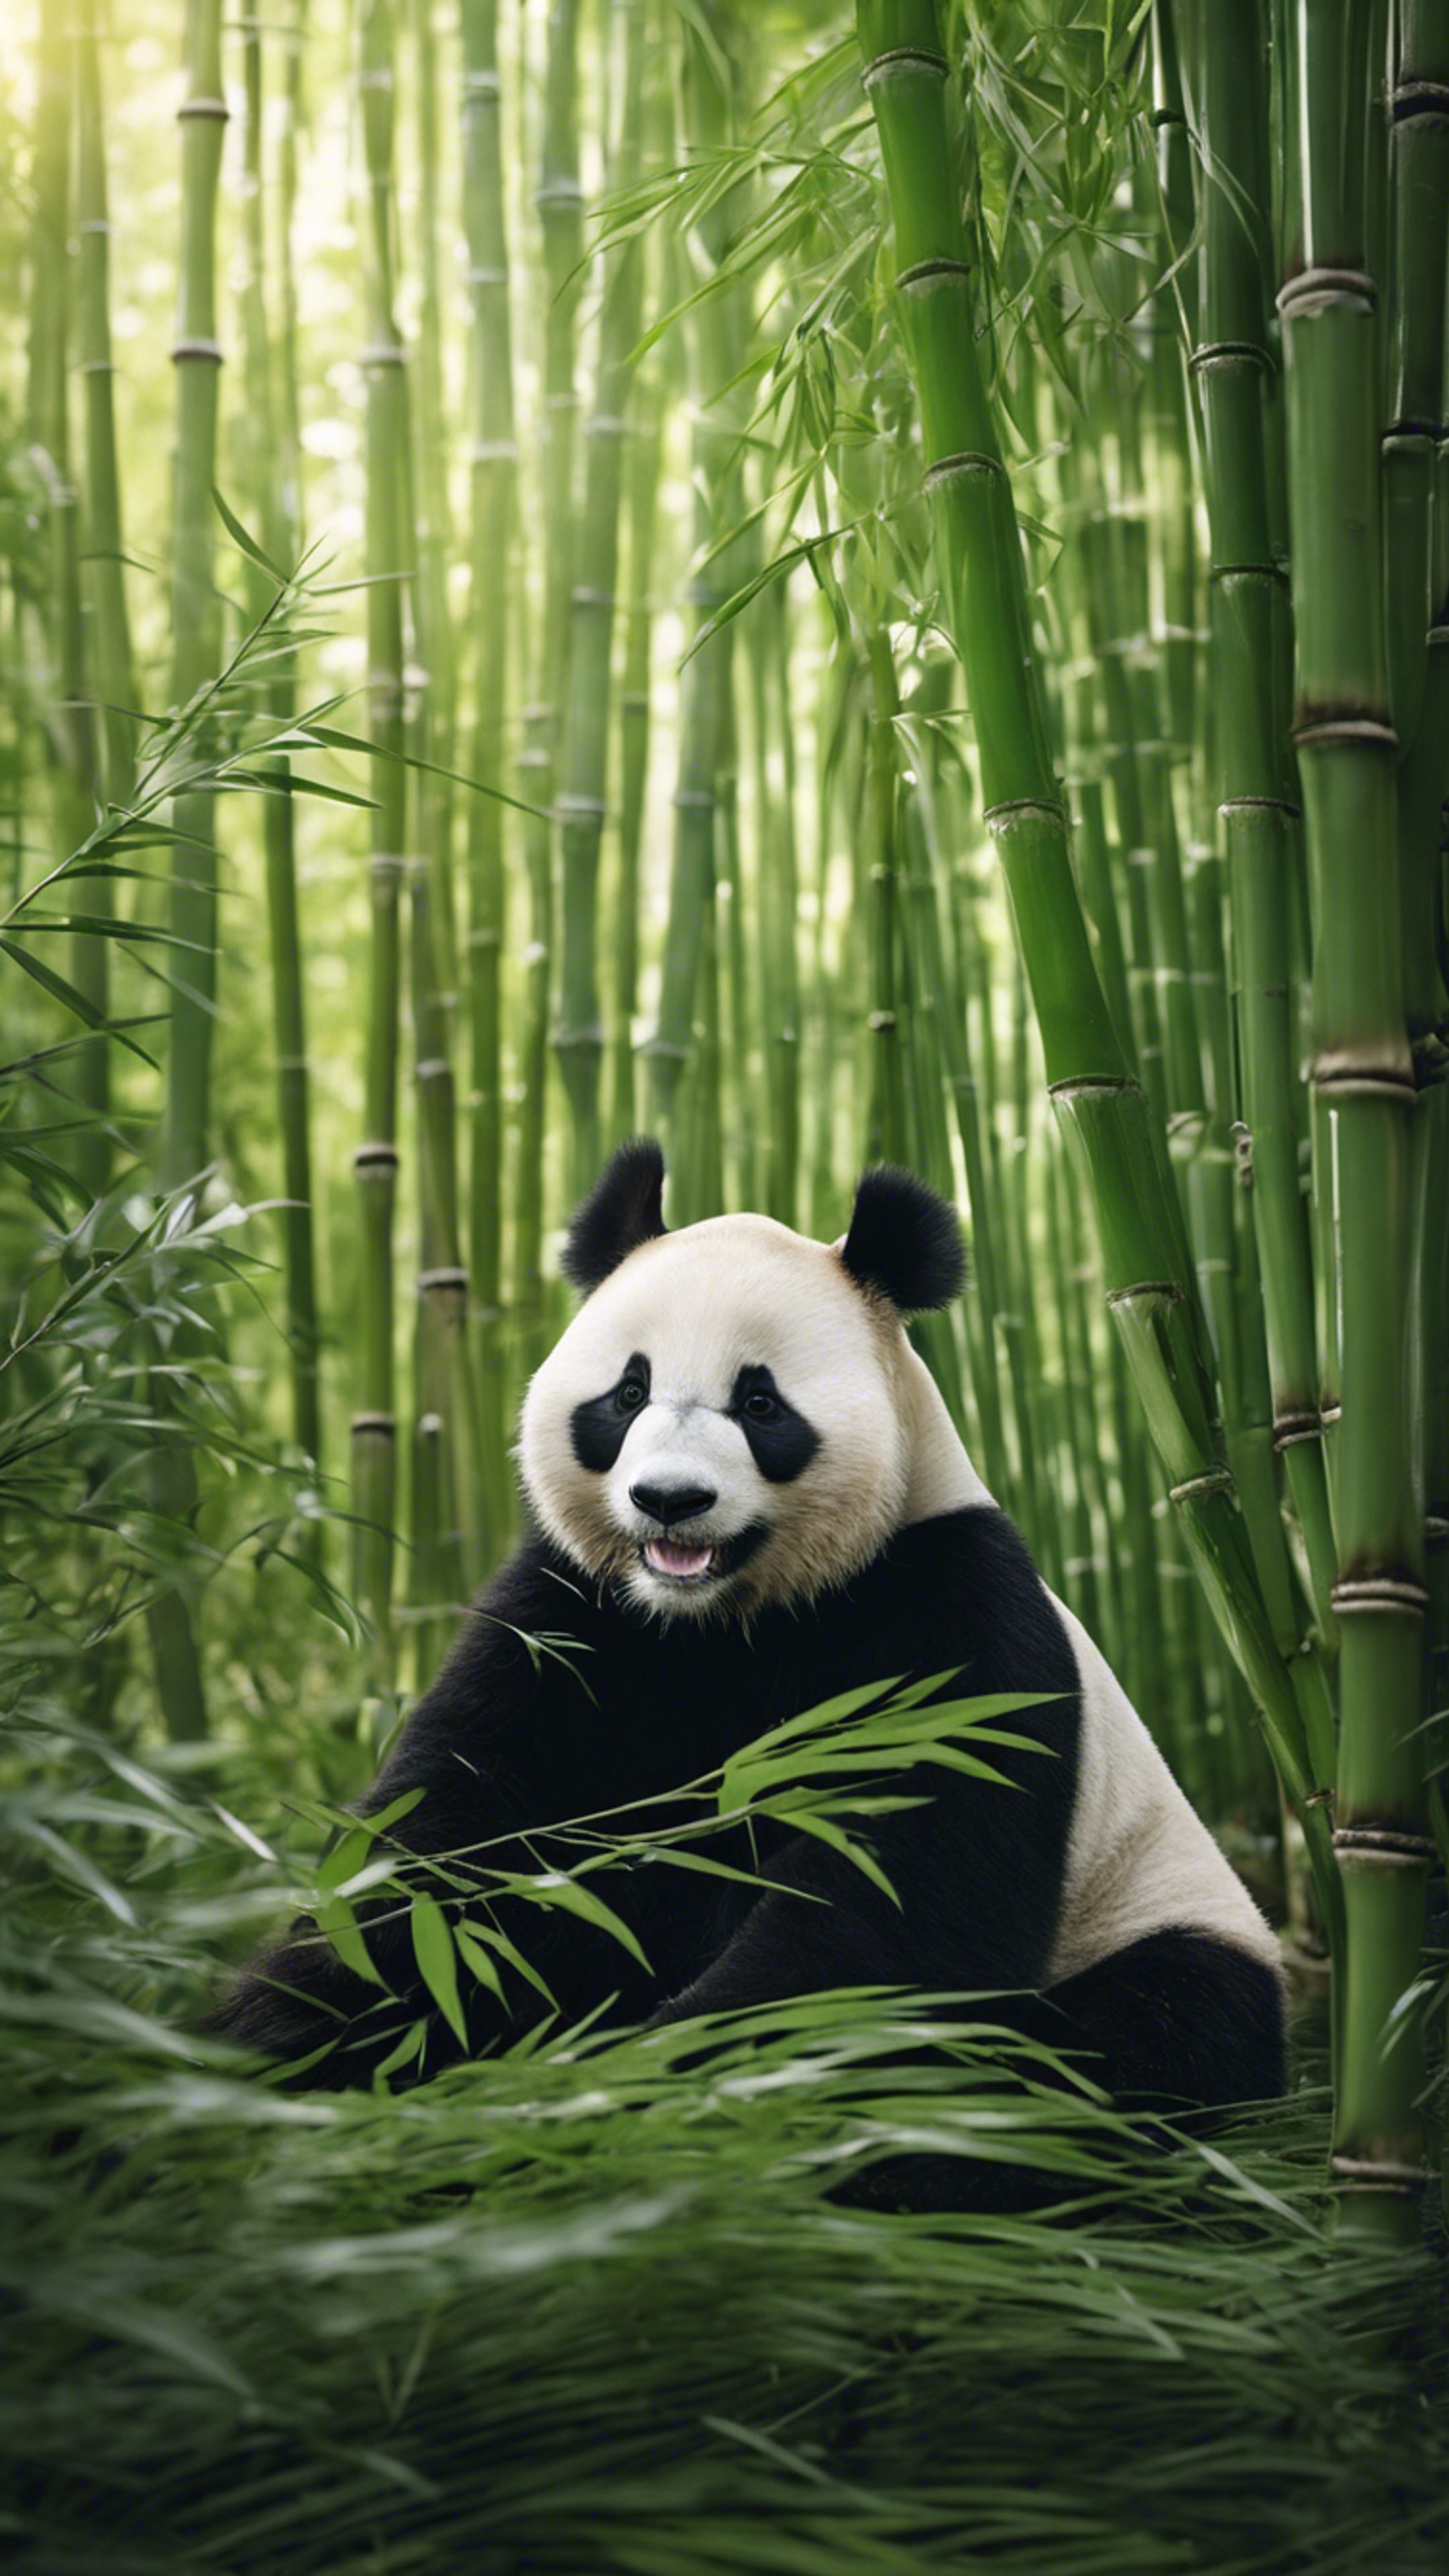 A panda bear enjoying a fresh shoot of bamboo in a mystic Chinese bamboo forest.壁紙[b600cb92ac9945f2a443]